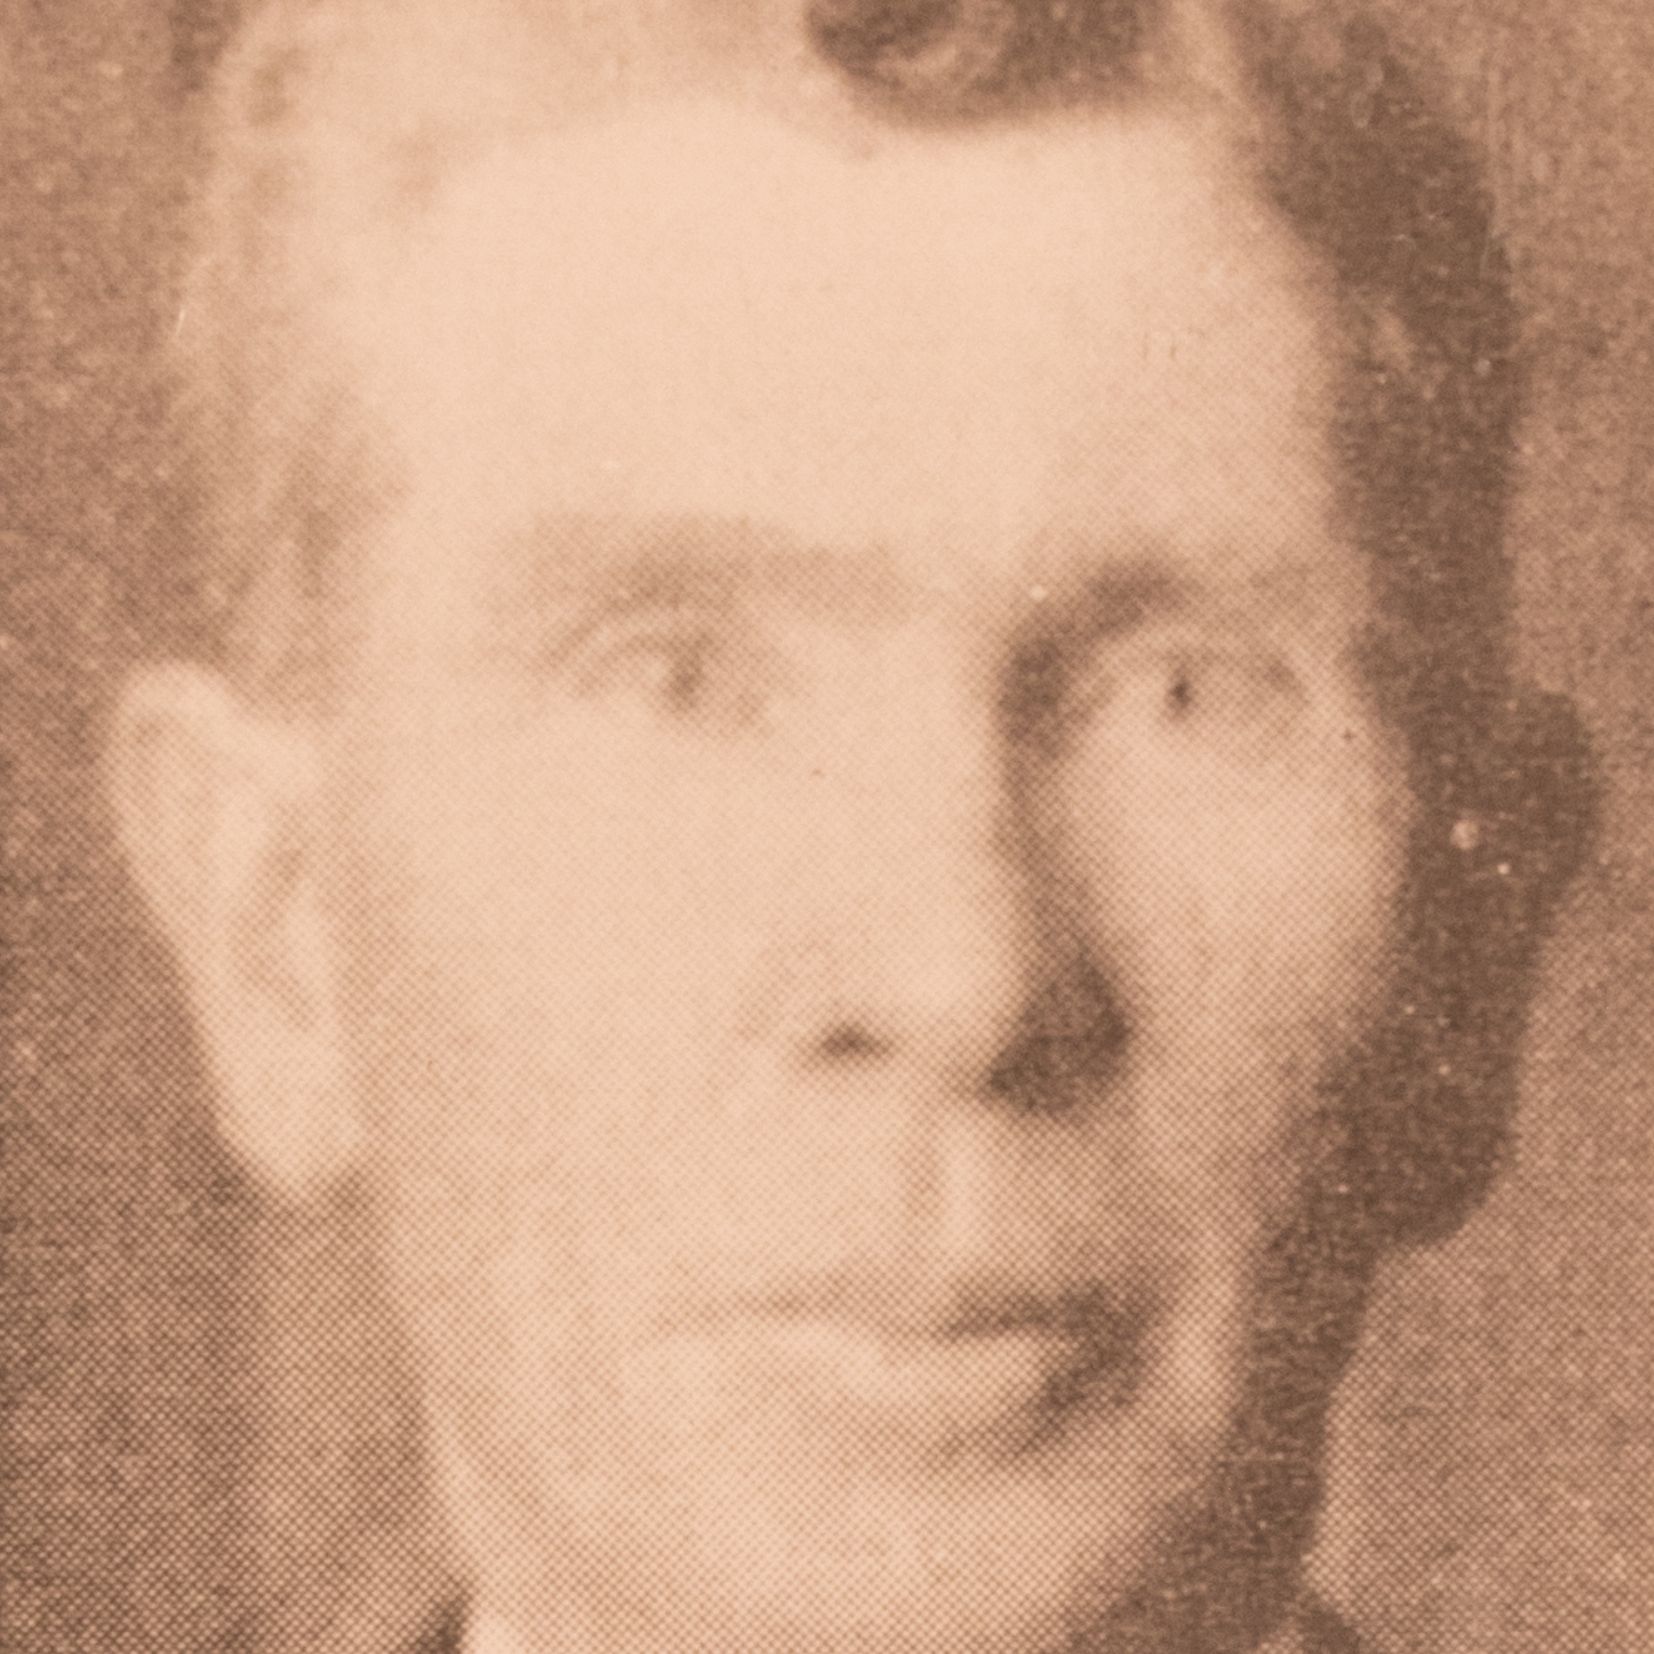 Mayor William F. Gurney